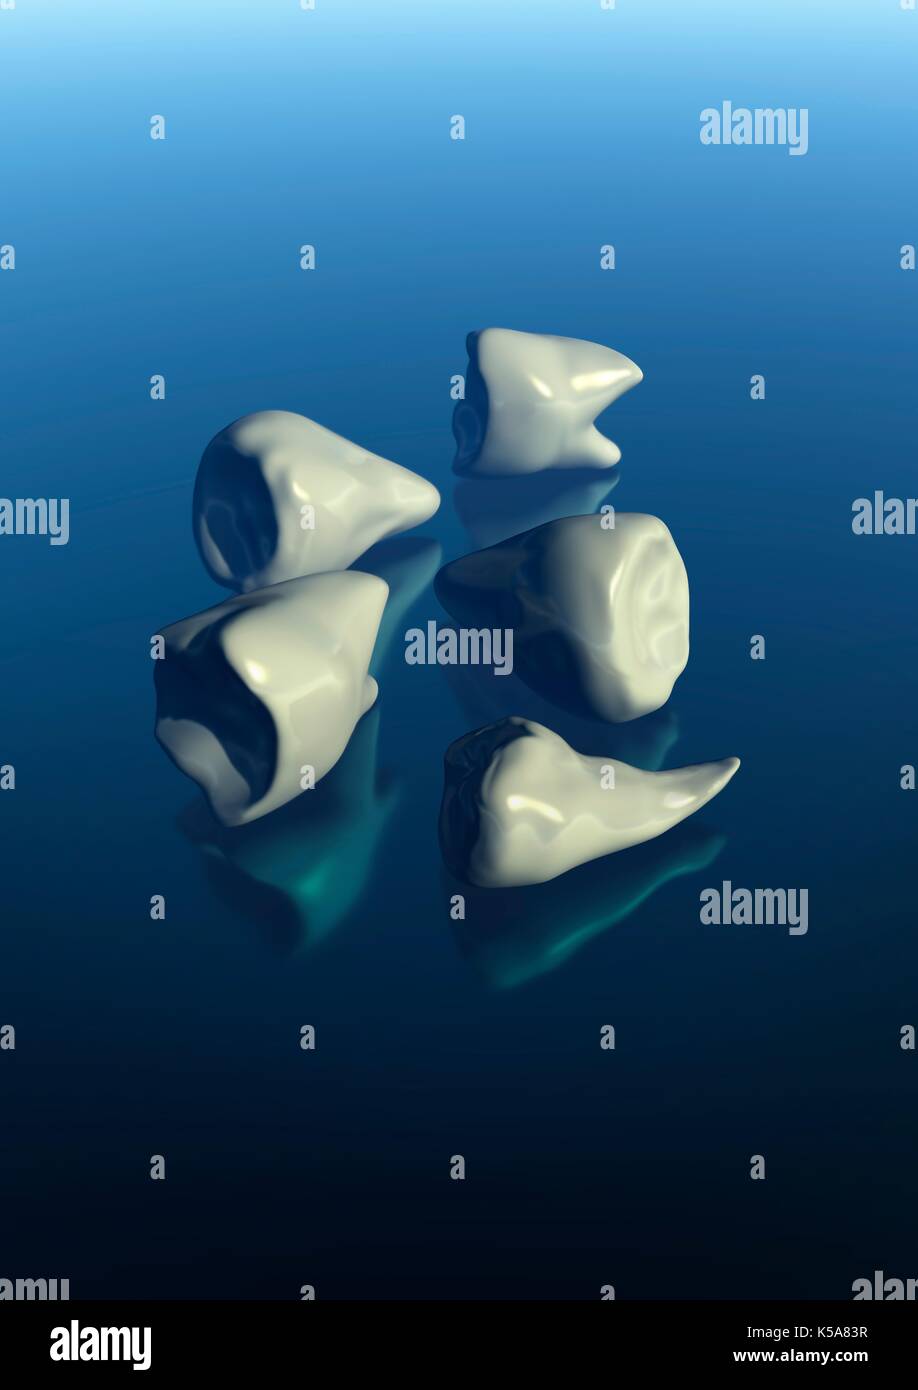 Human teeth against blue background, illustration. Stock Photo